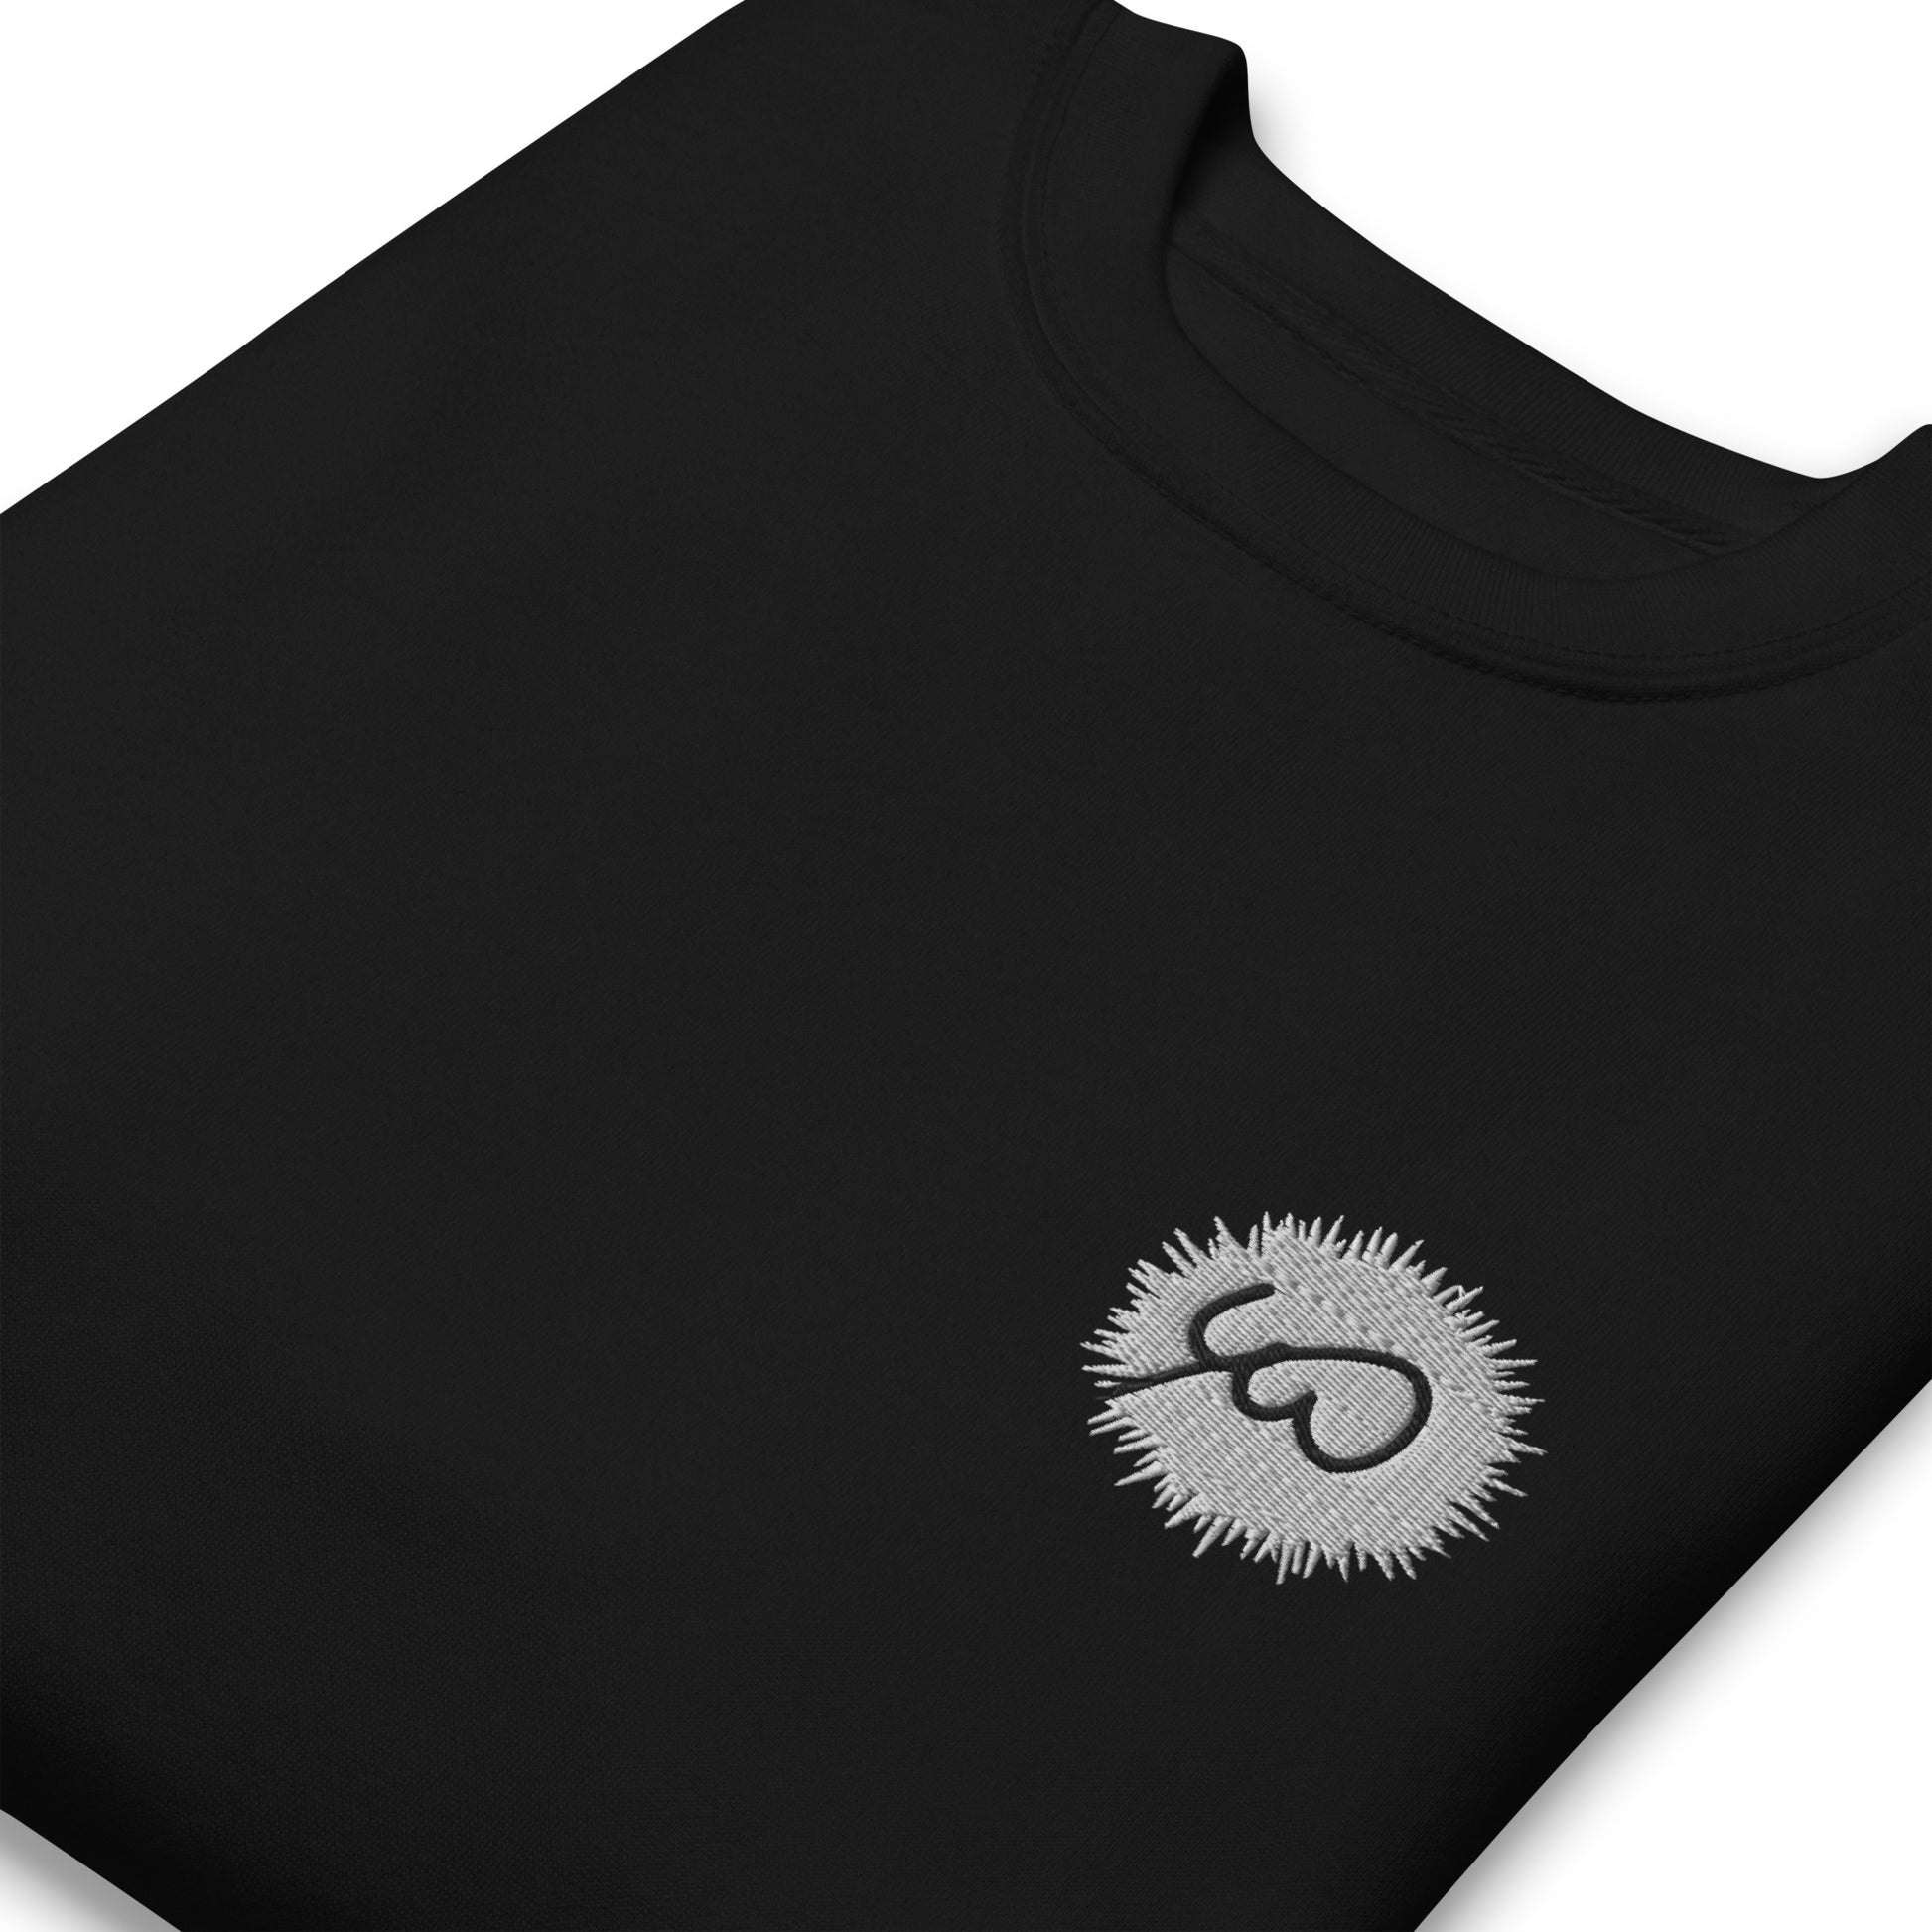 Black Unisex Premium Sweatshirt -Front design with Black and White Embroidery of Uniwari Logo